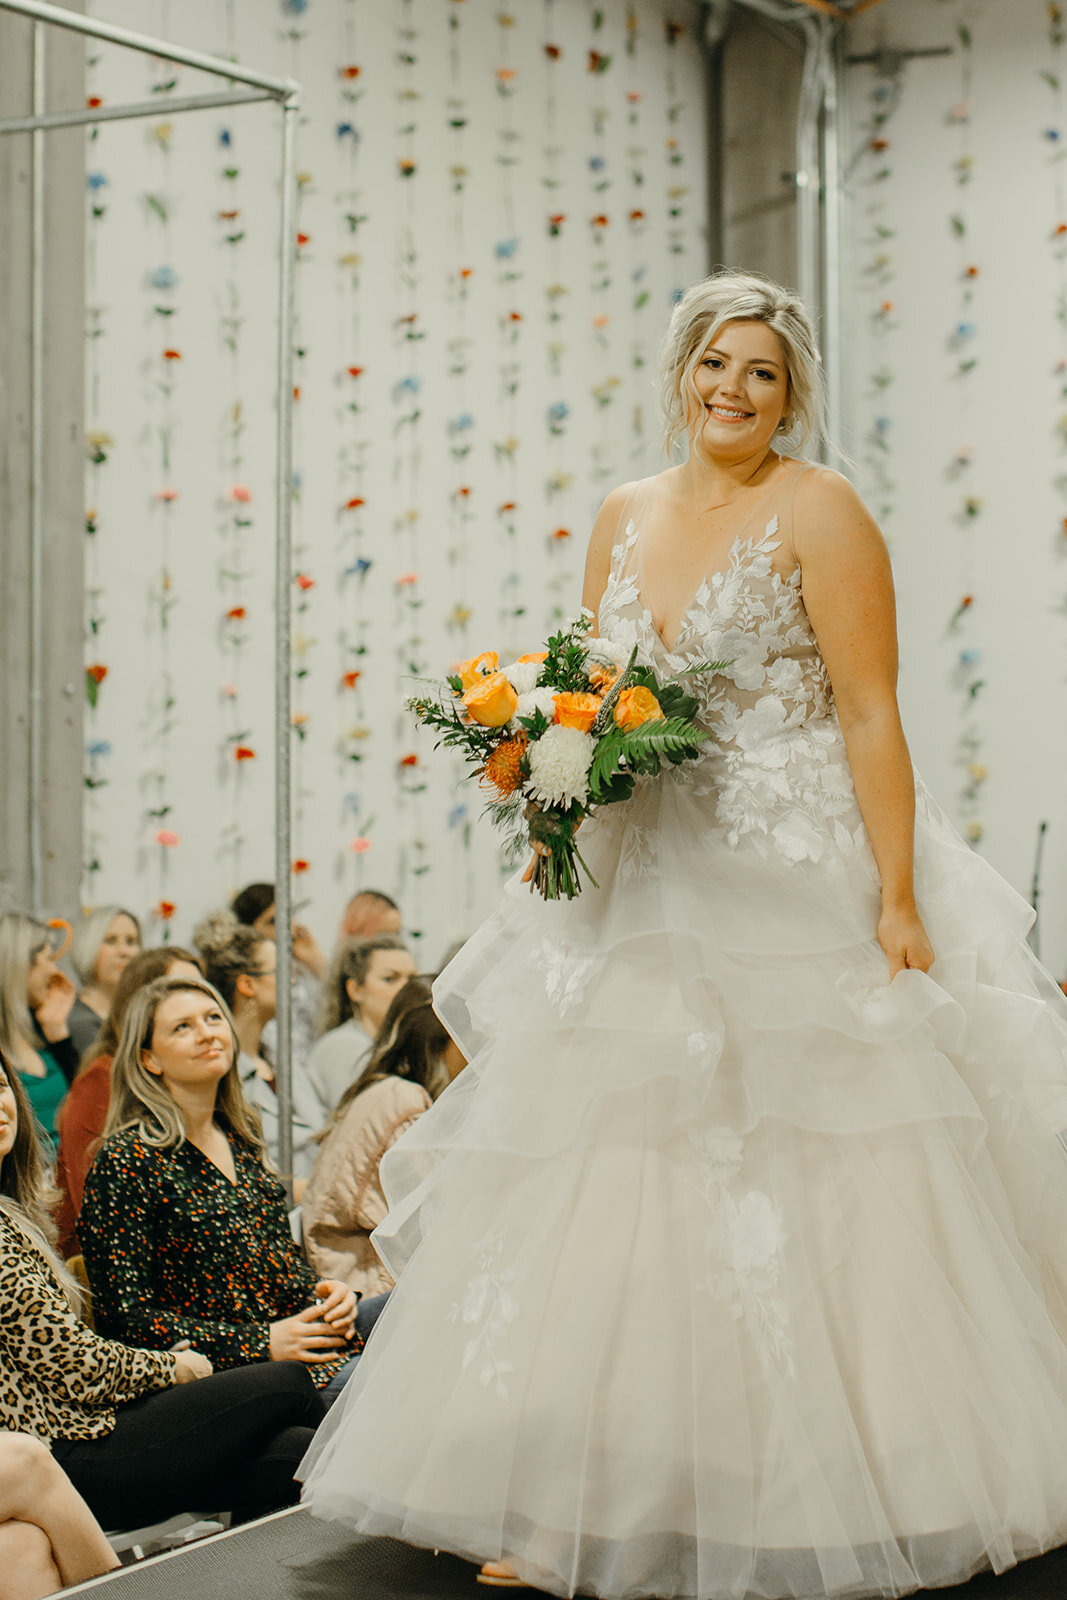 spokane plus size bride wedding dress fashion show